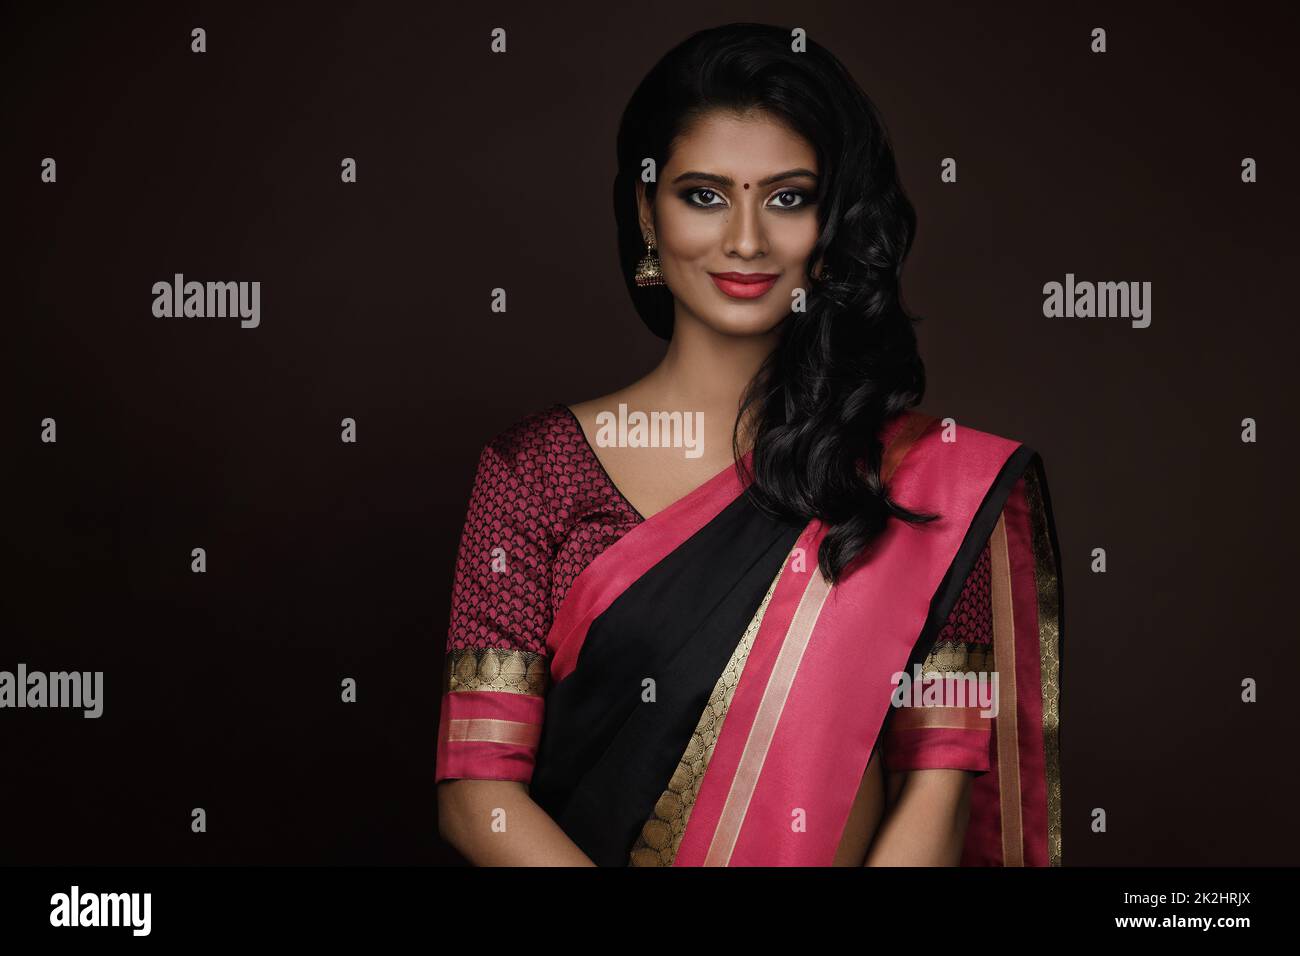 Beautiful Indian woman wearing traditional sari dress Stock Photo